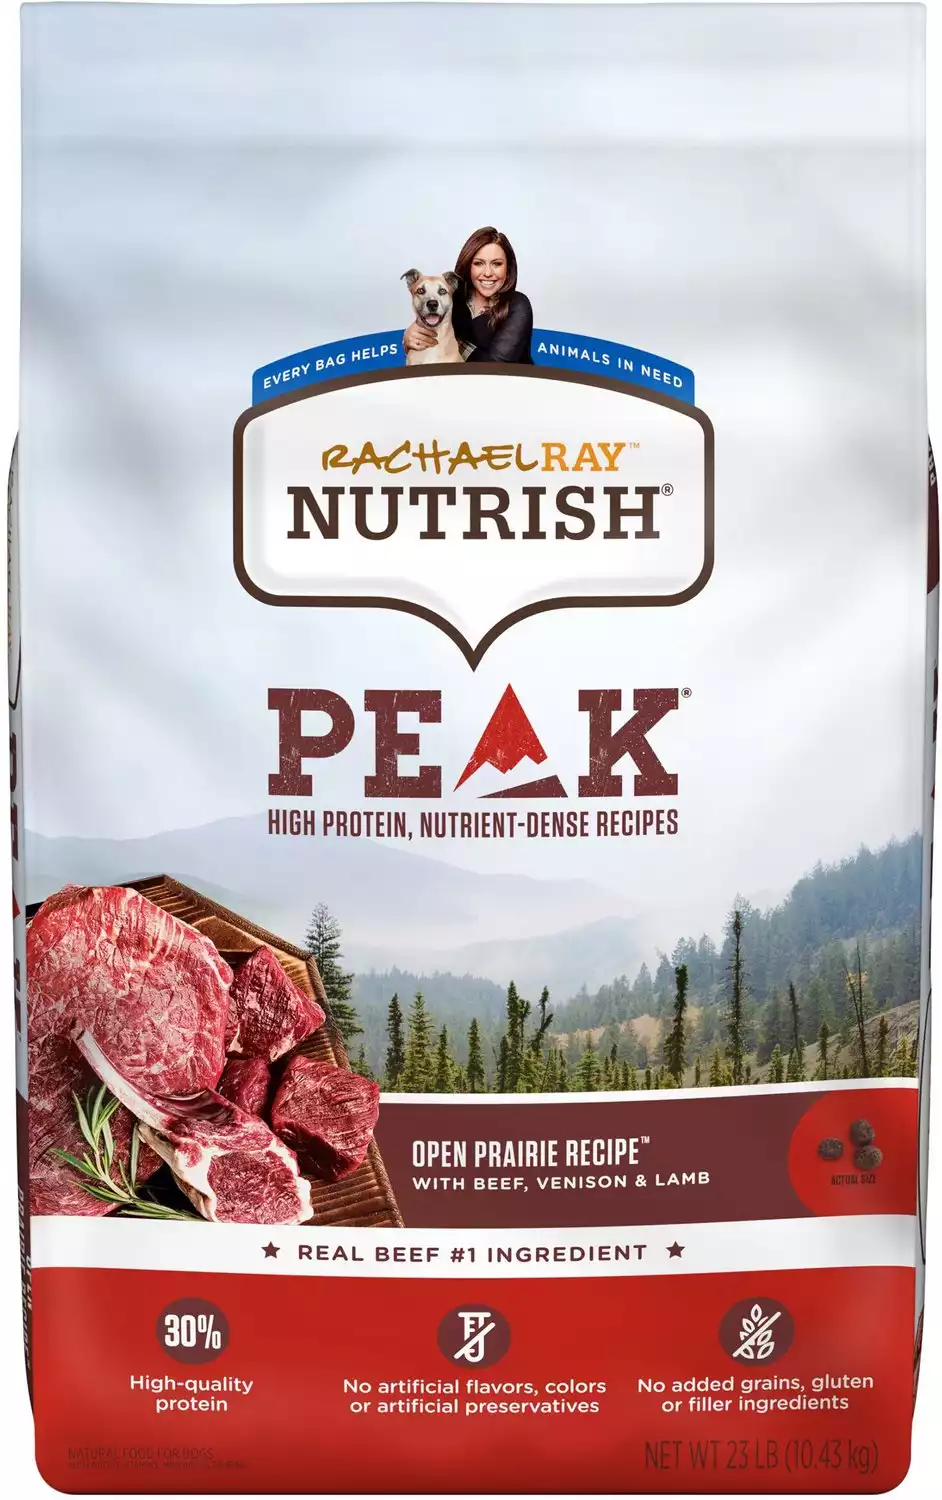 Rachael Ray Nutrish PEAK Open Prairie Recipe With Beef